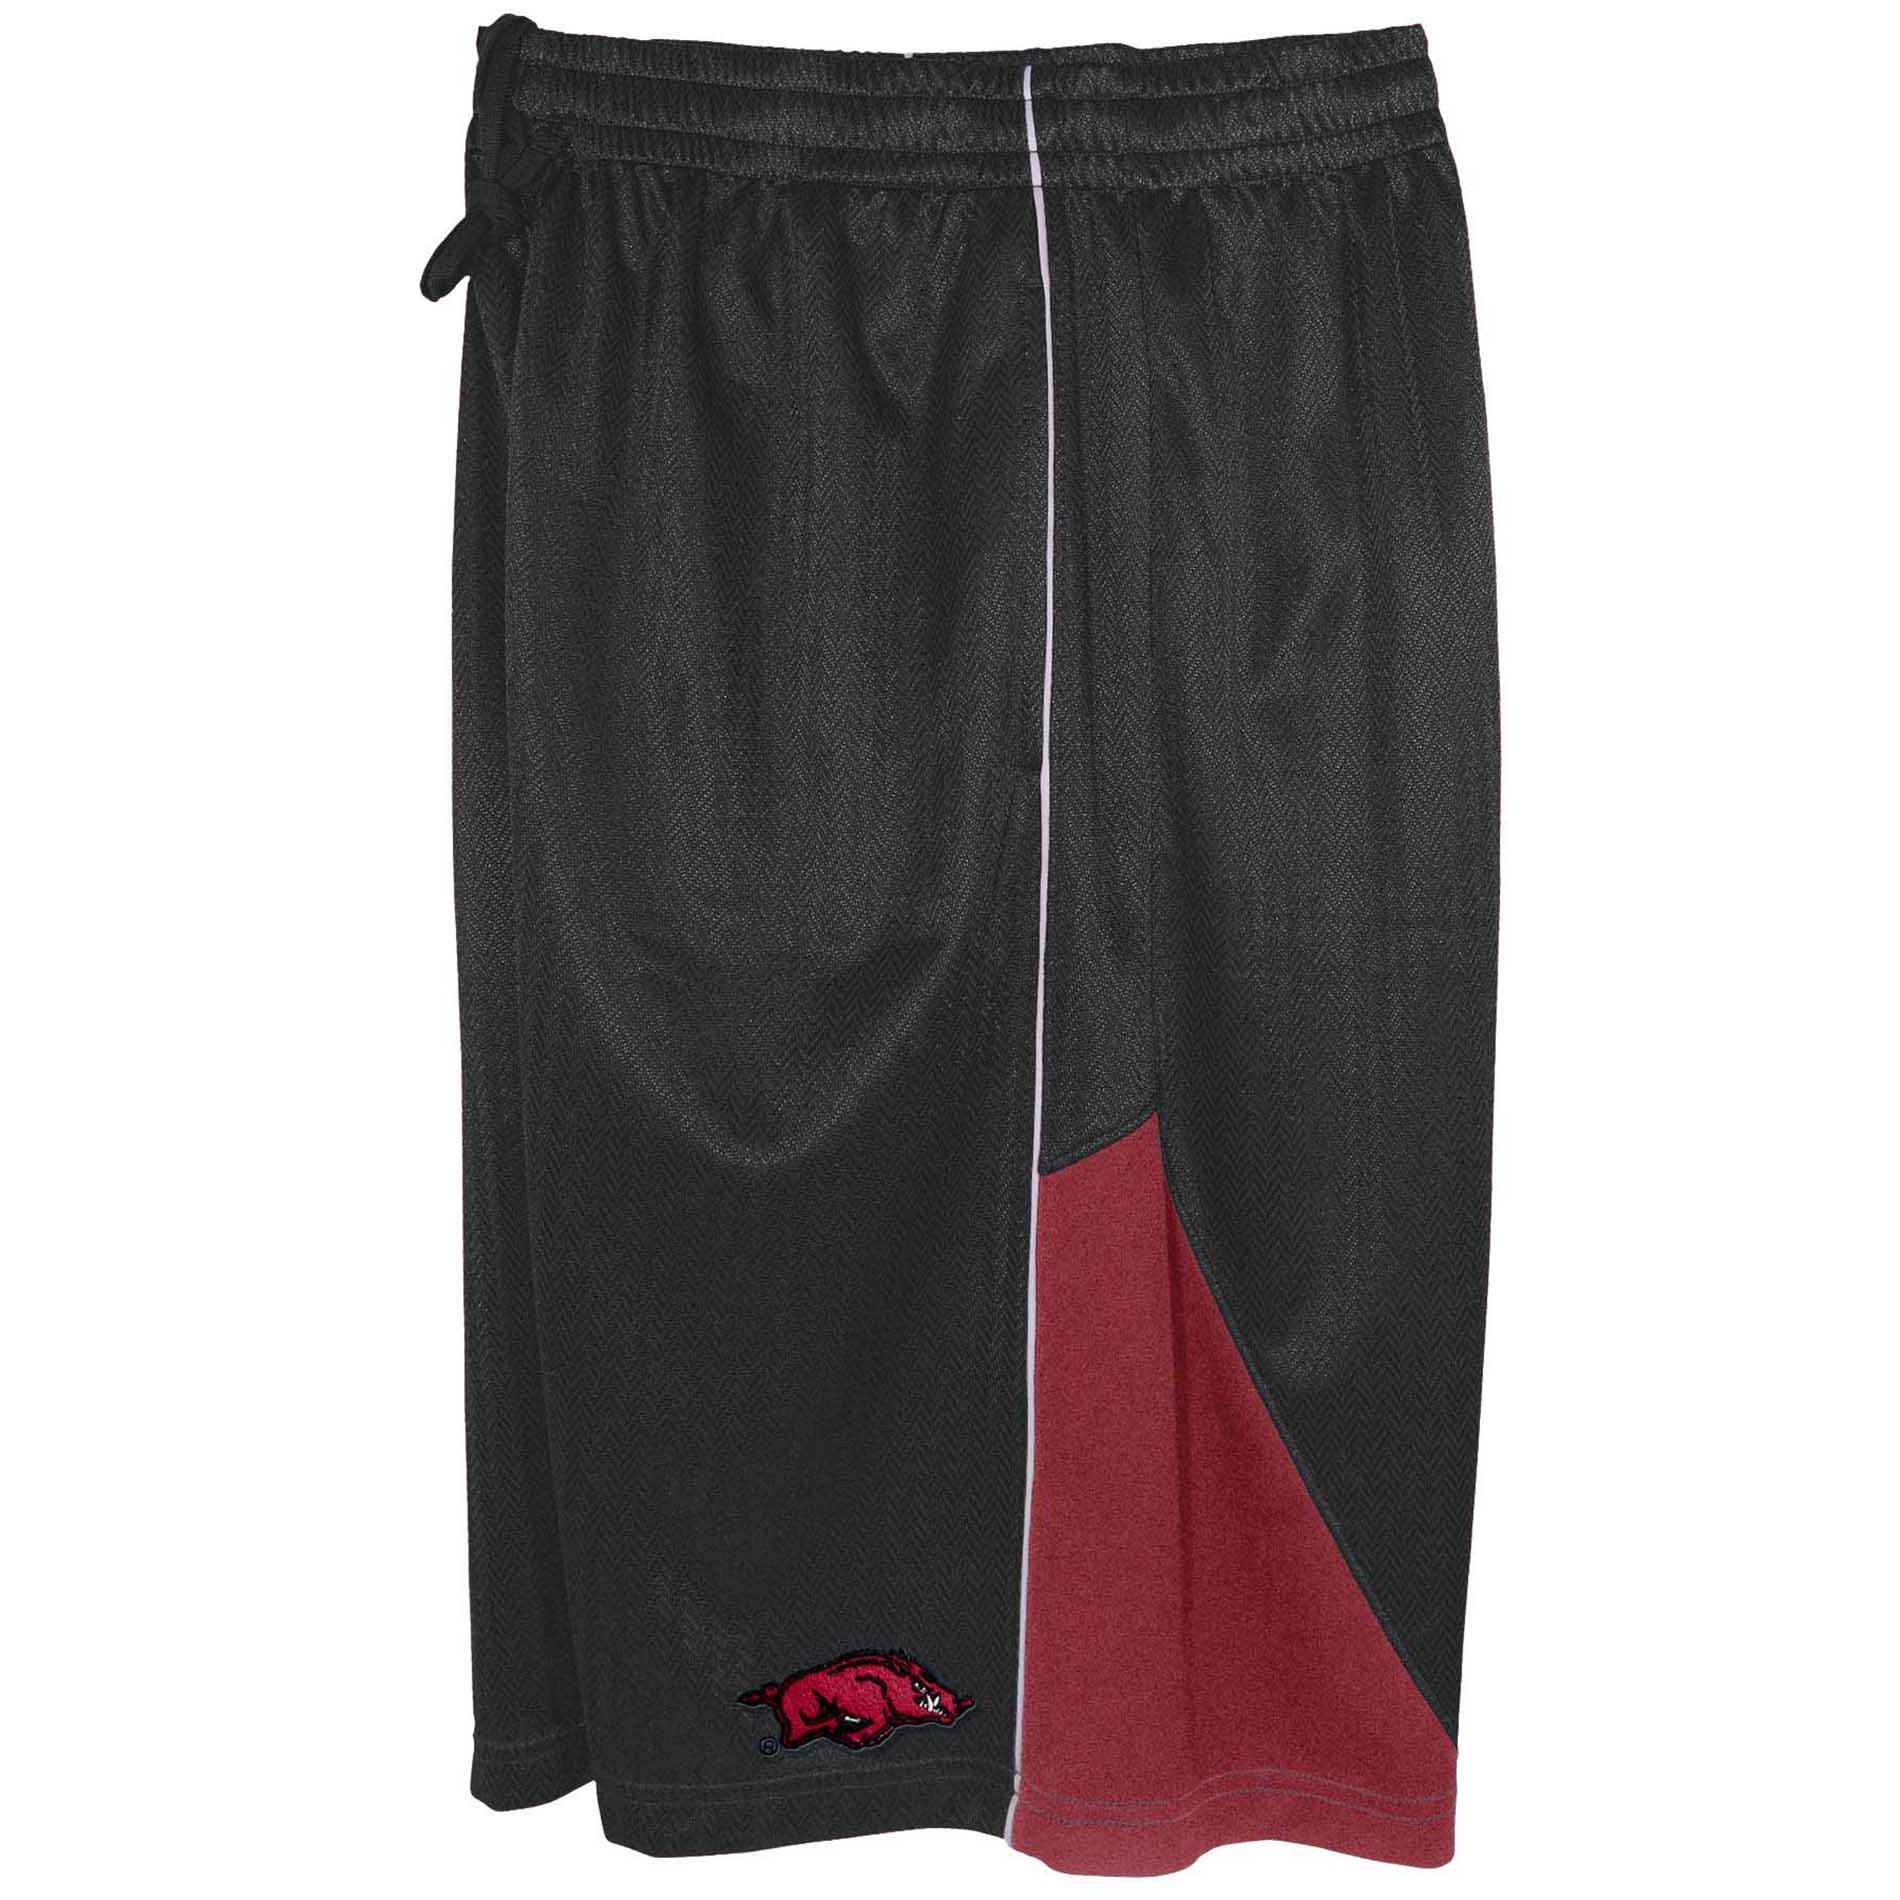 Arkansas Razorback Basketball Shorts